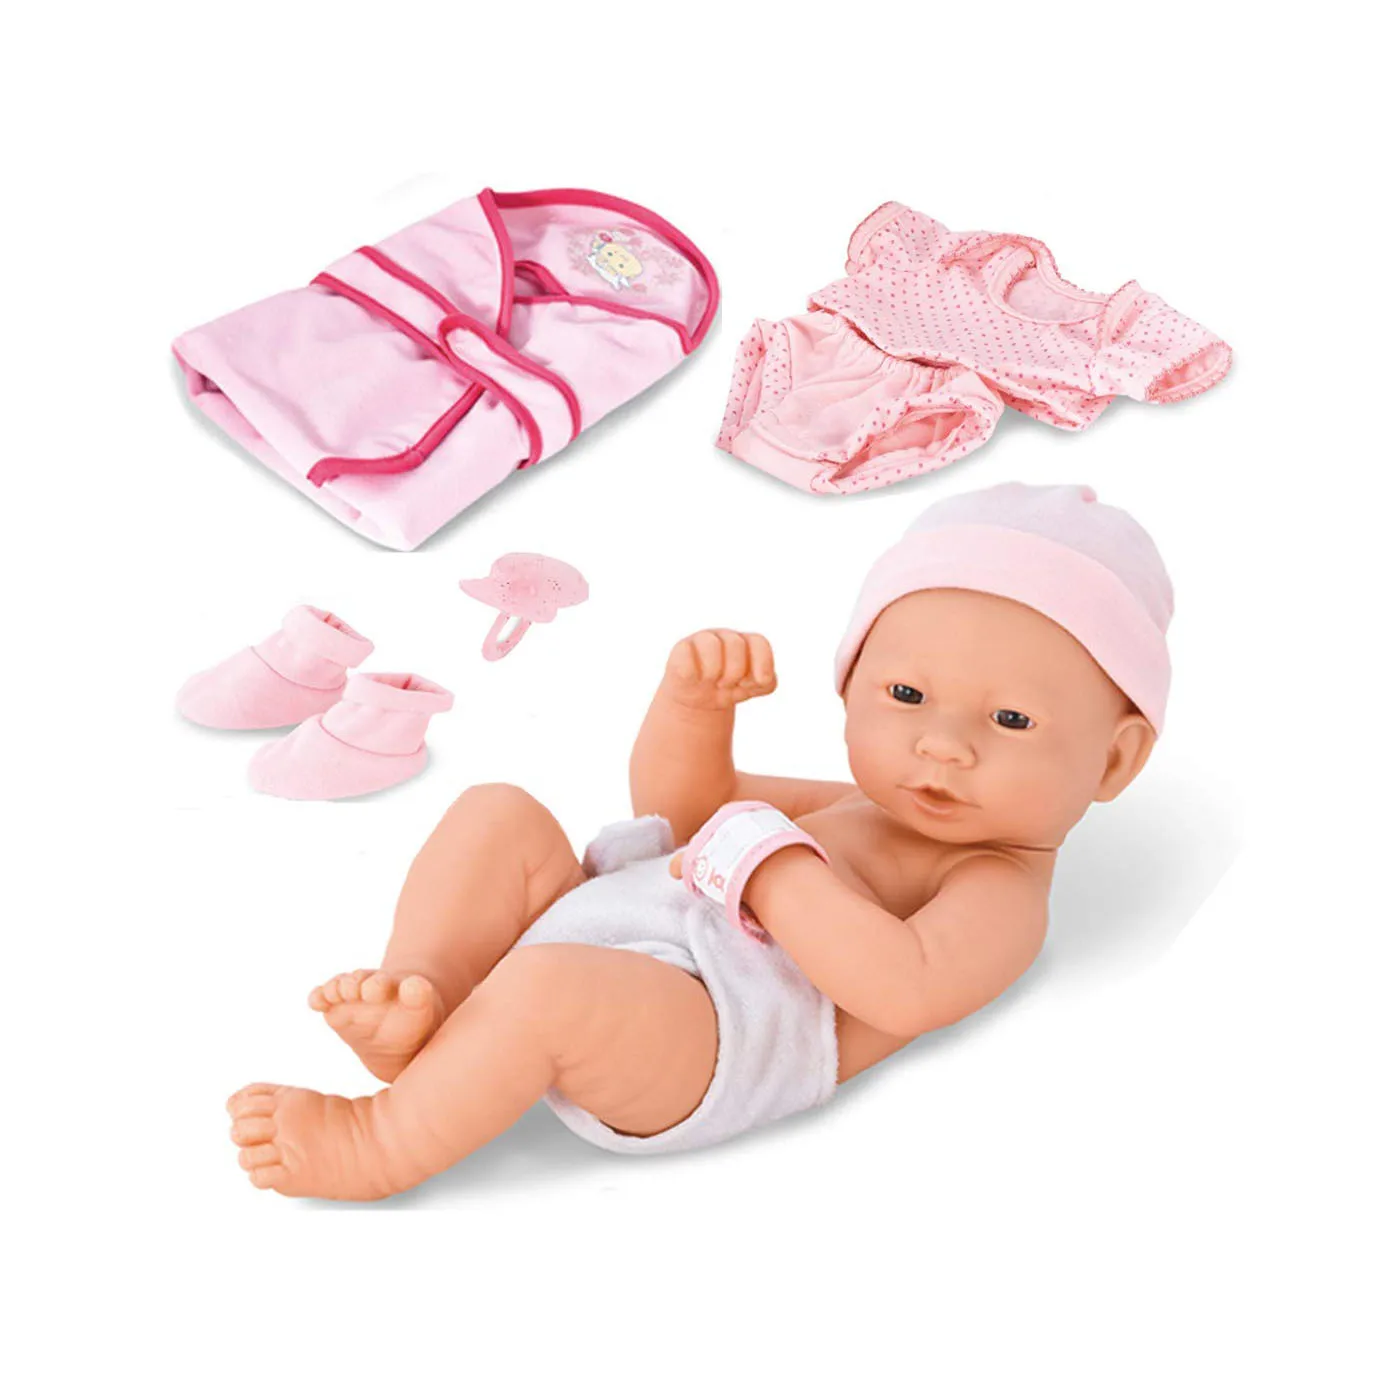 newborn doll clothes